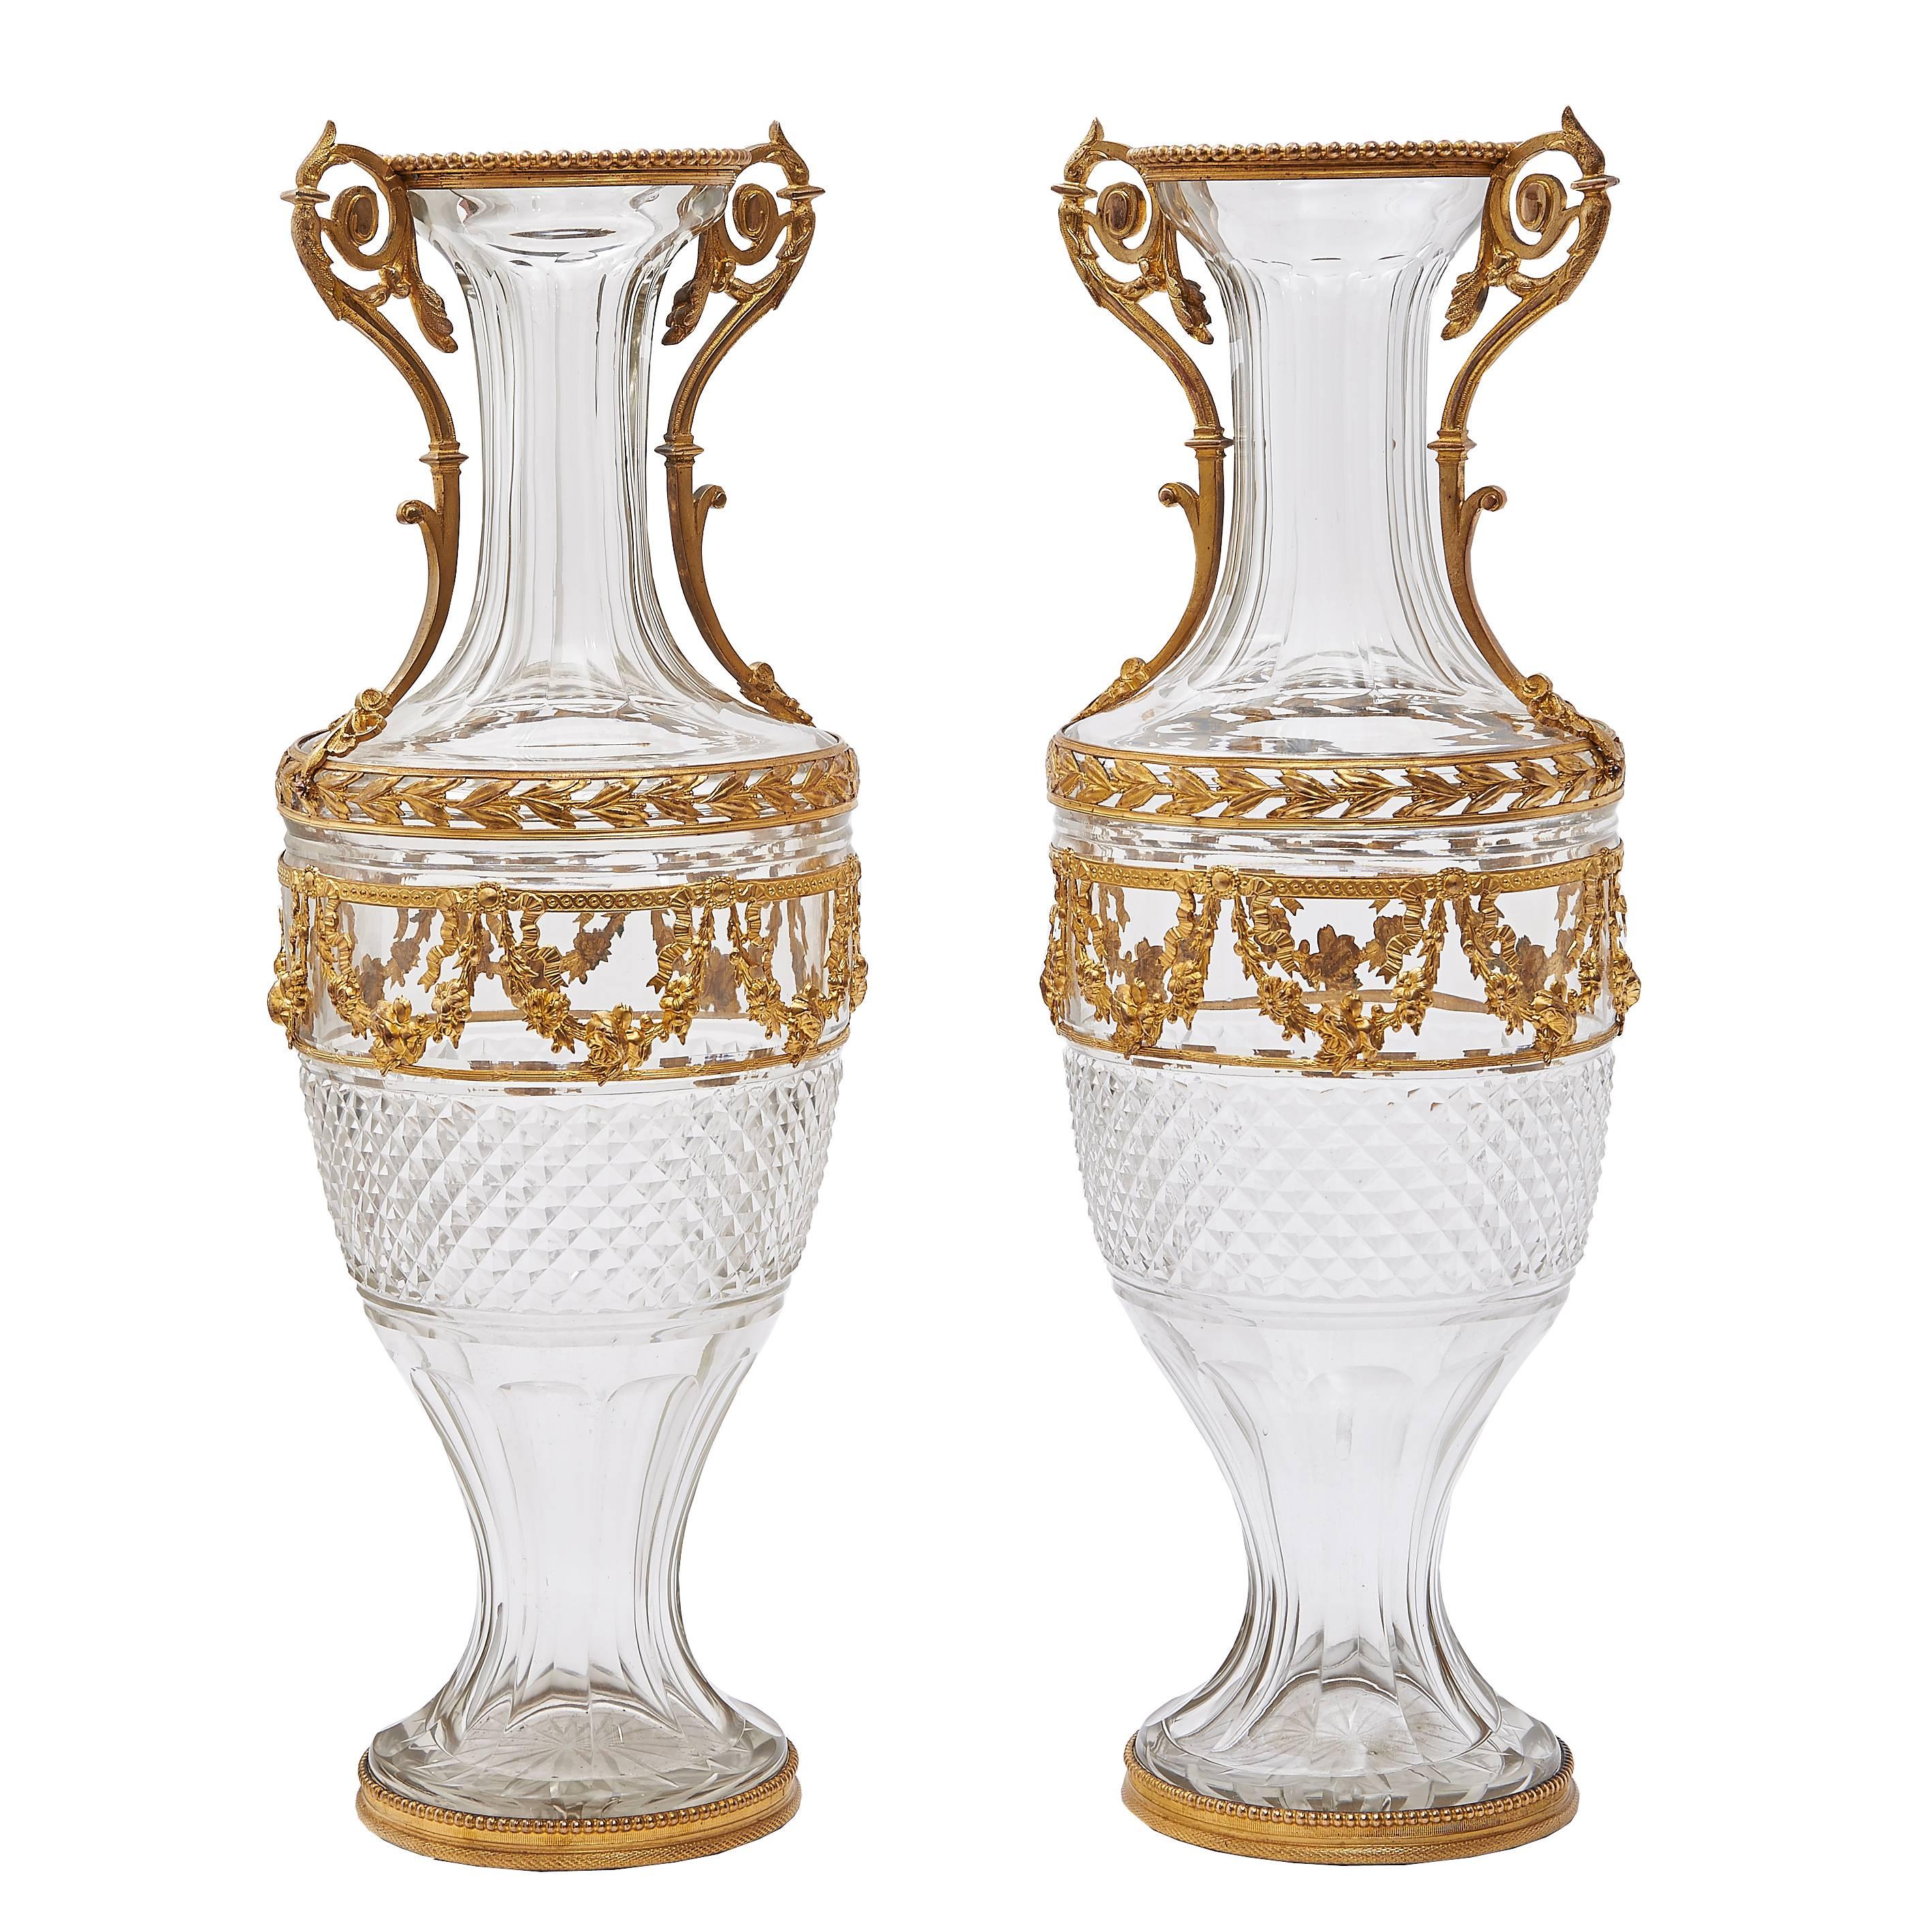 Pair of Large Napoleon III Ormolu and Cut Crystal Vases, circa 1870